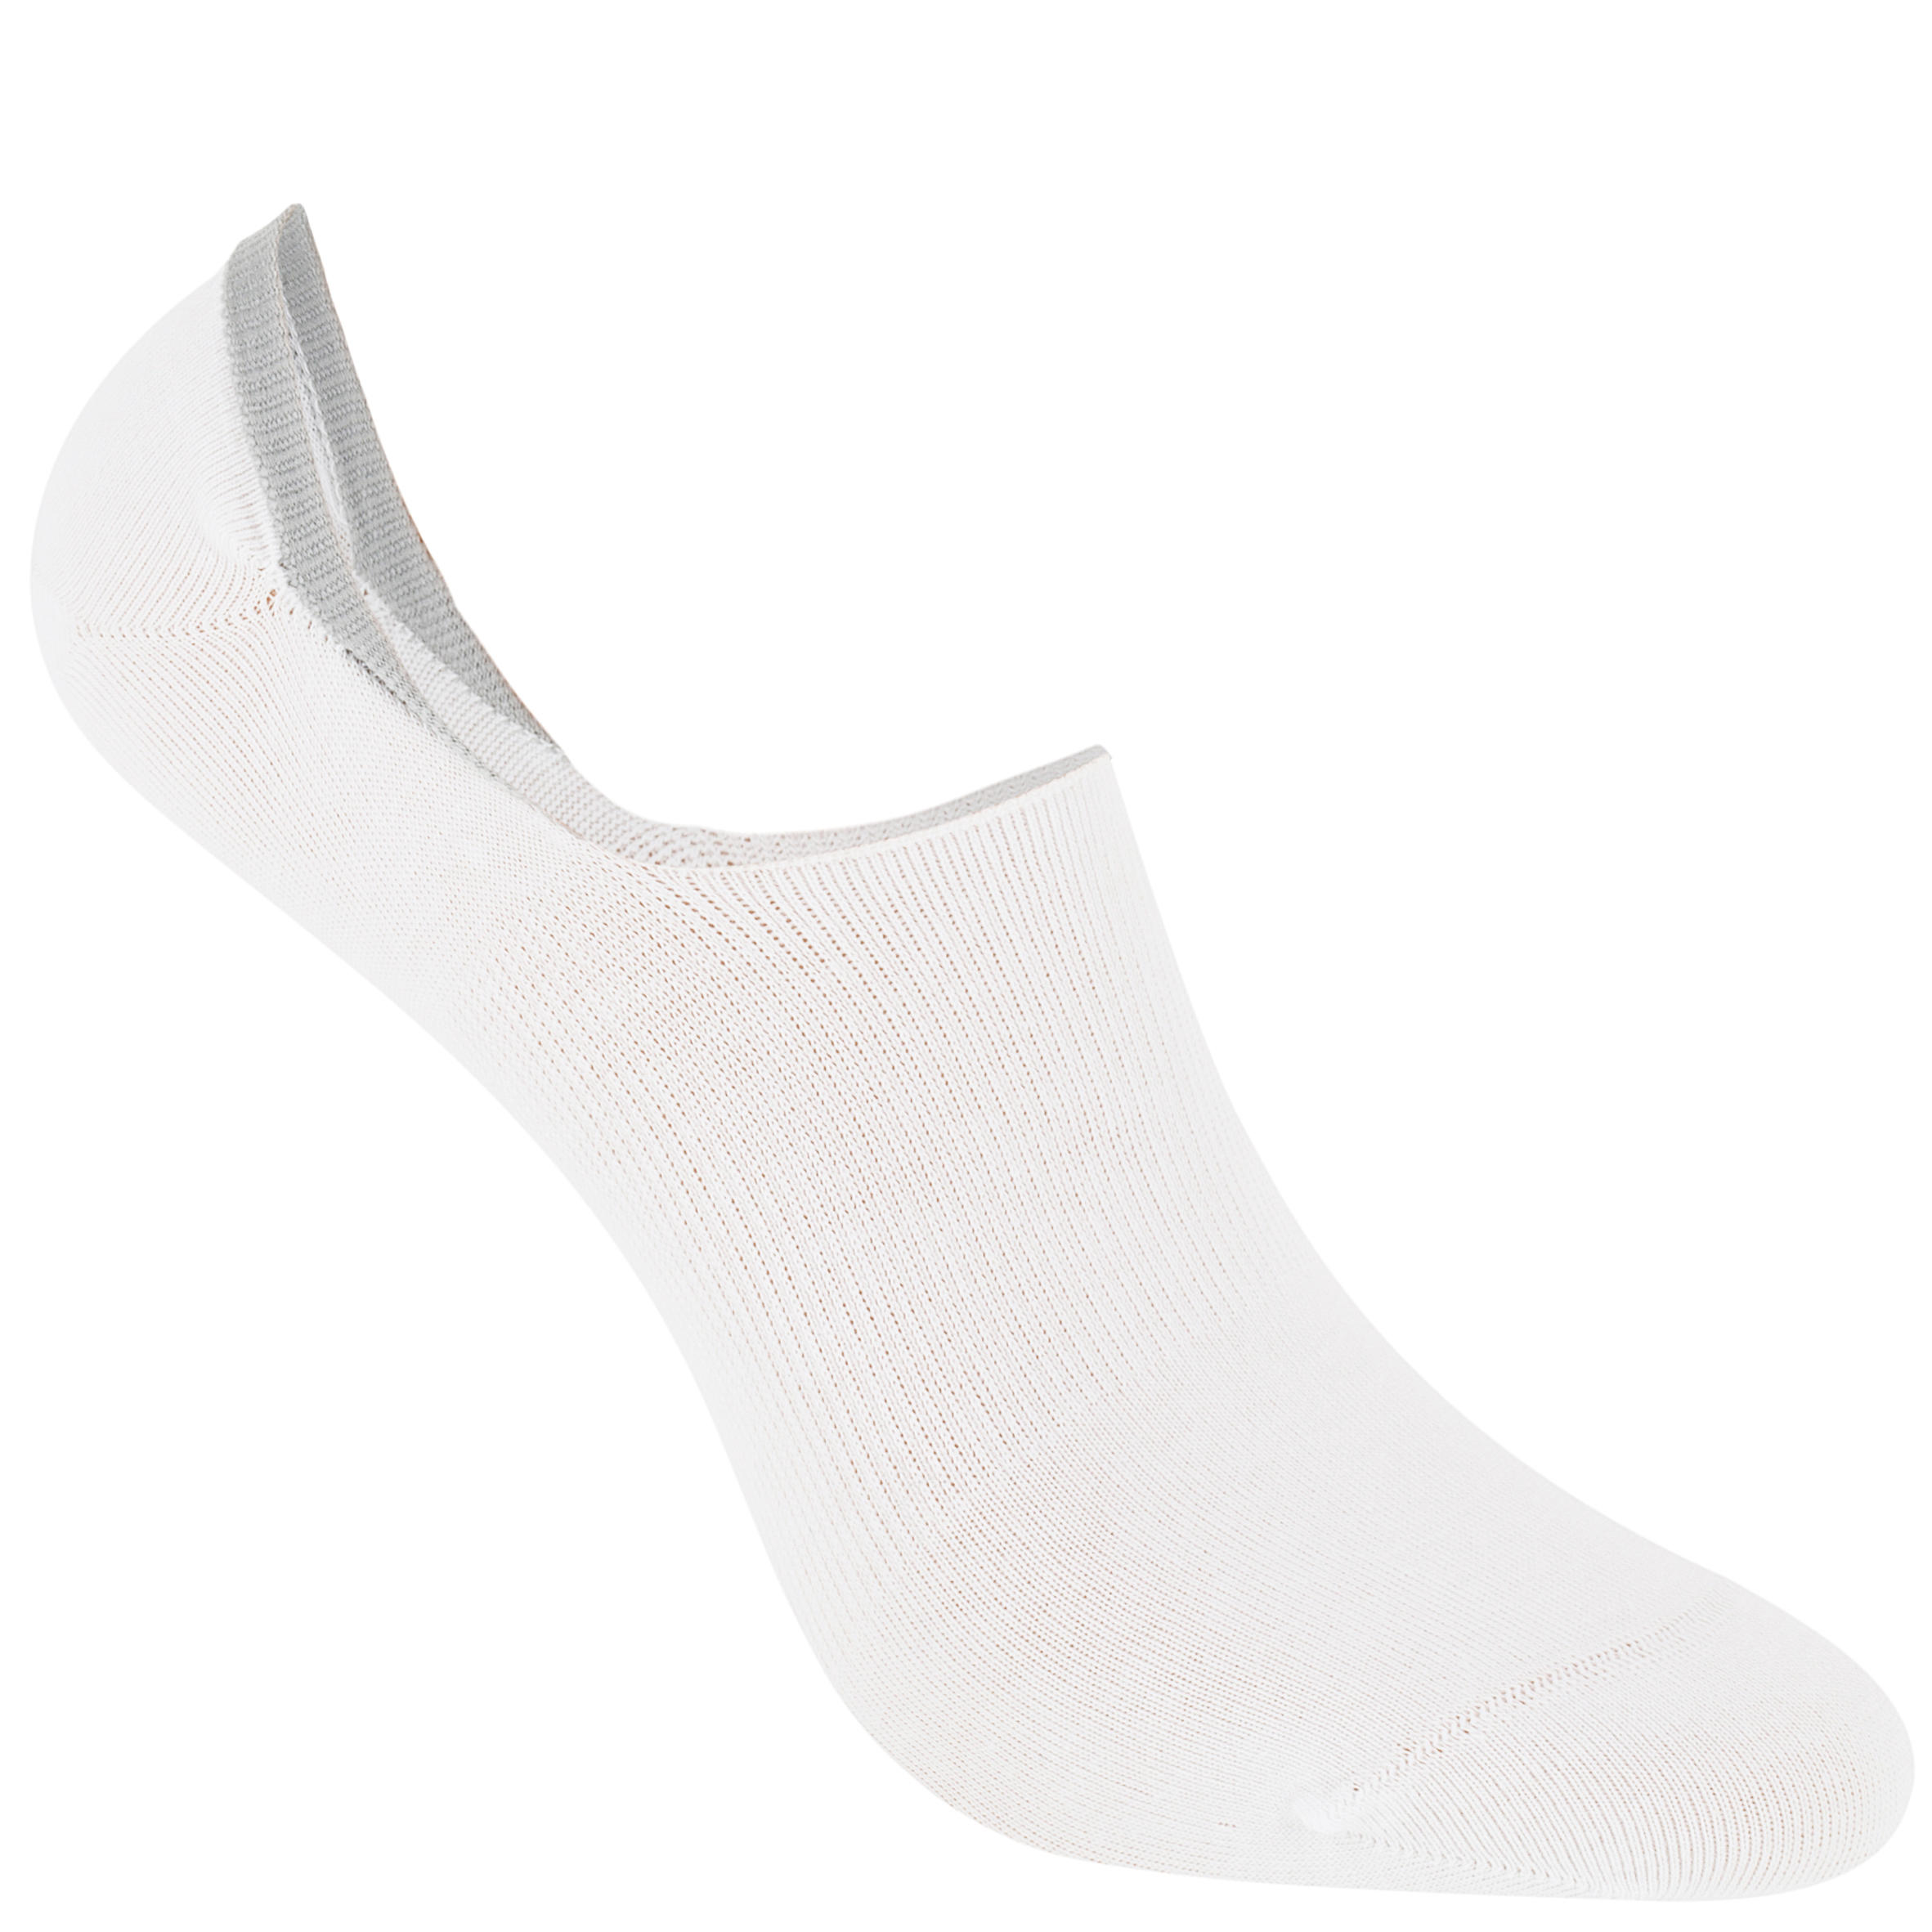 NEWFEEL Invisible 500 Women's Fitness Walking Socks - White